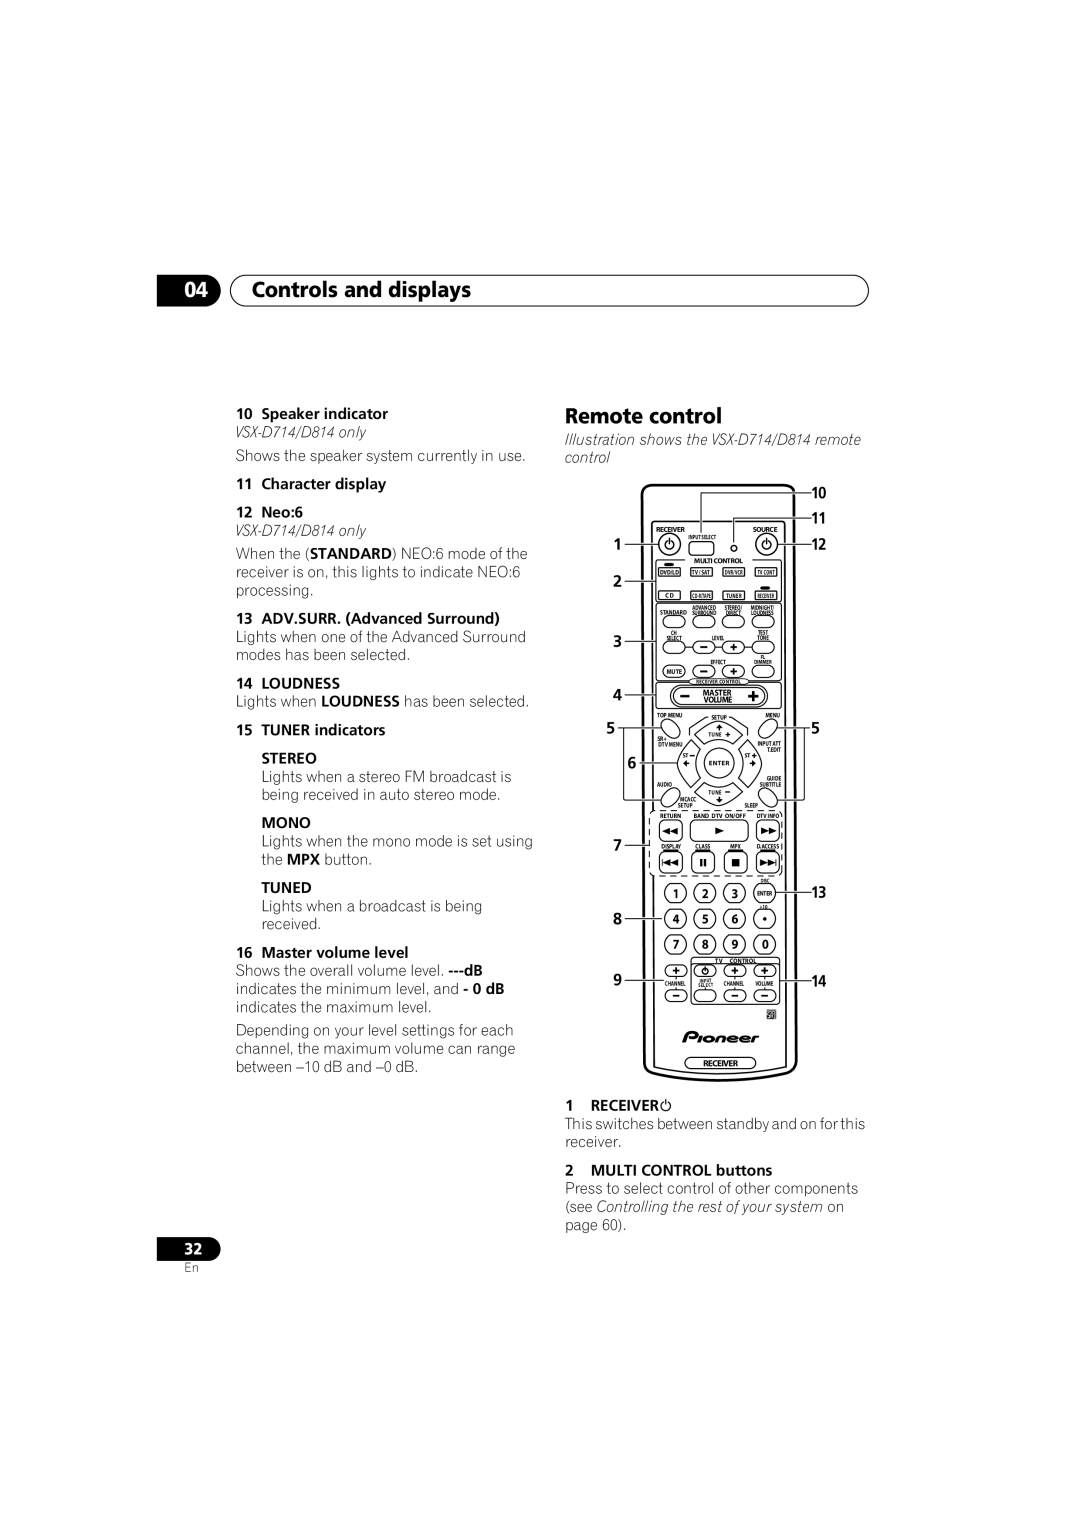 Pioneer VSX-D514 manual Remote control, 04Controls and displays, VSX-D714/D814only 